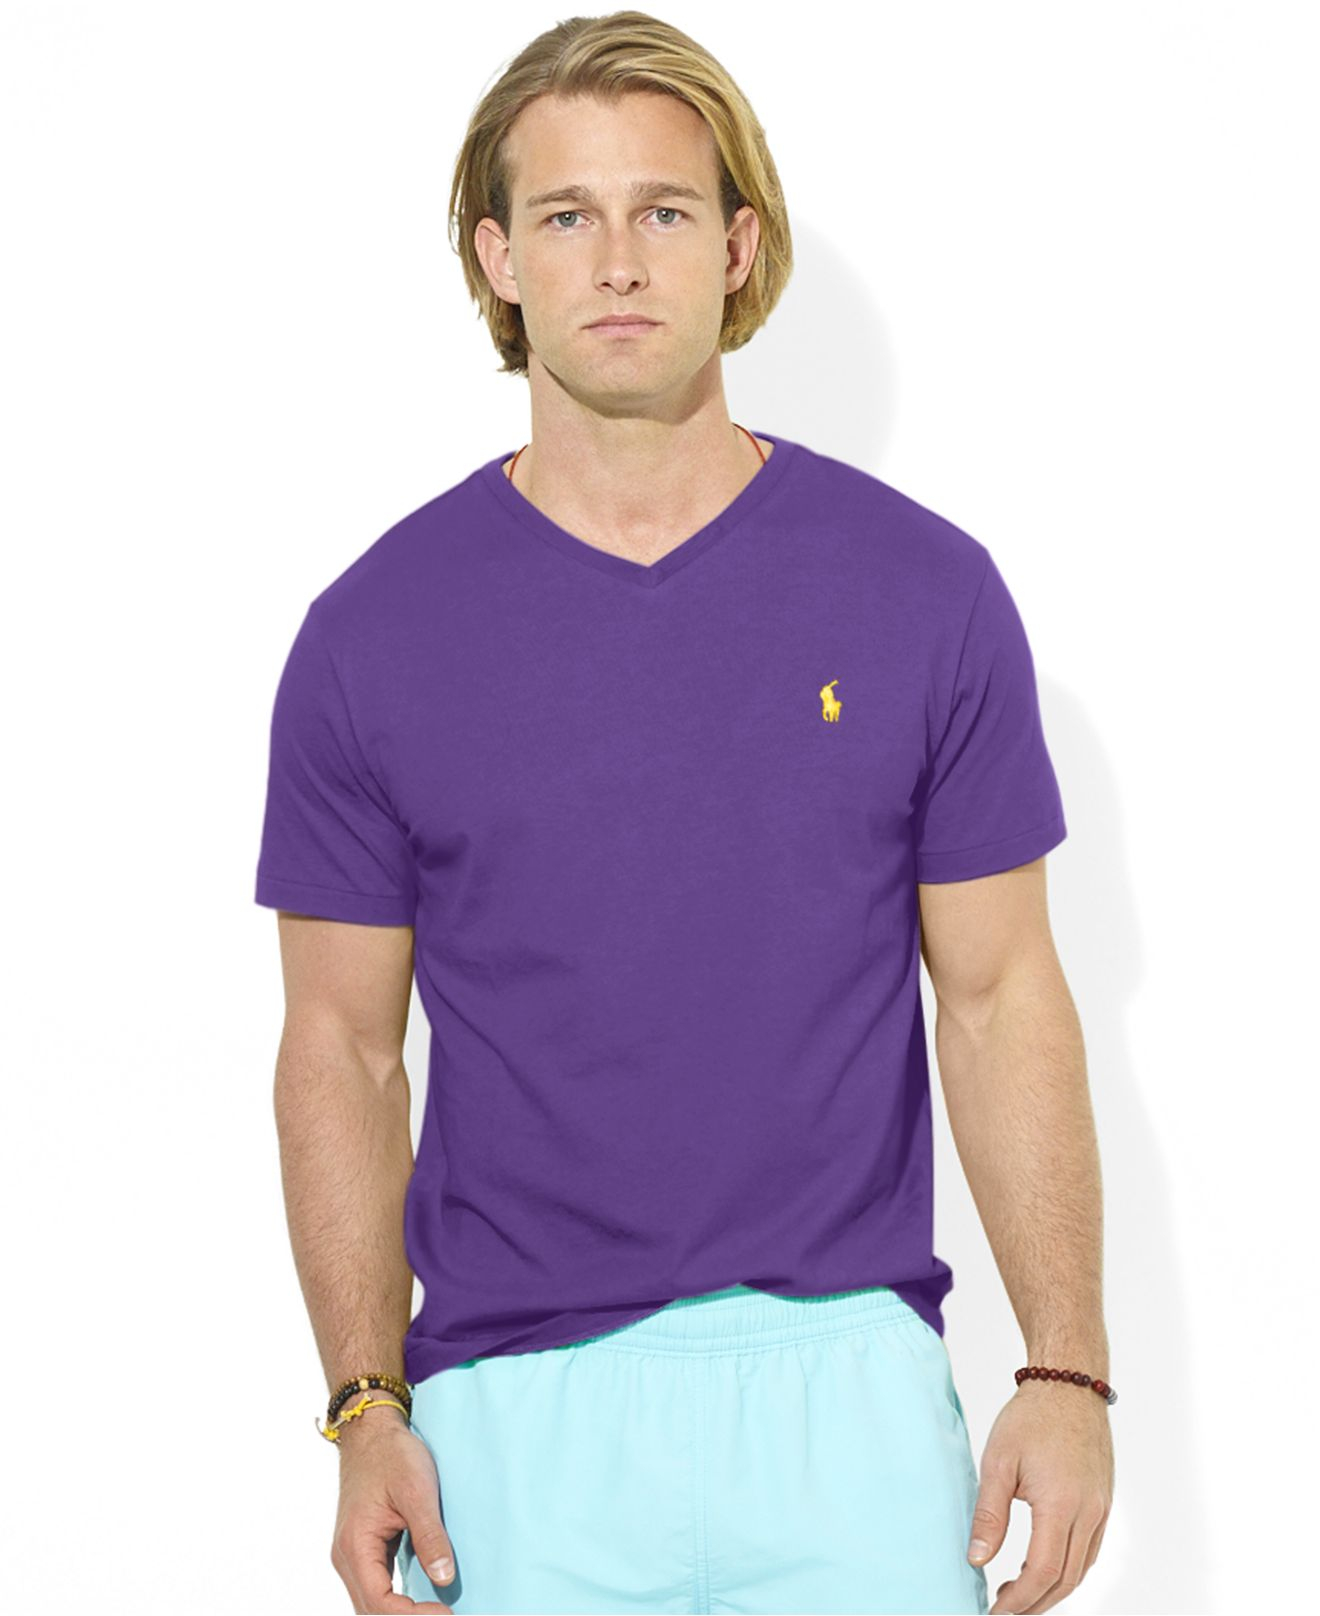 Polo Ralph Lauren Polo Jersey Vneck Shirt in Purple for Men - Lyst